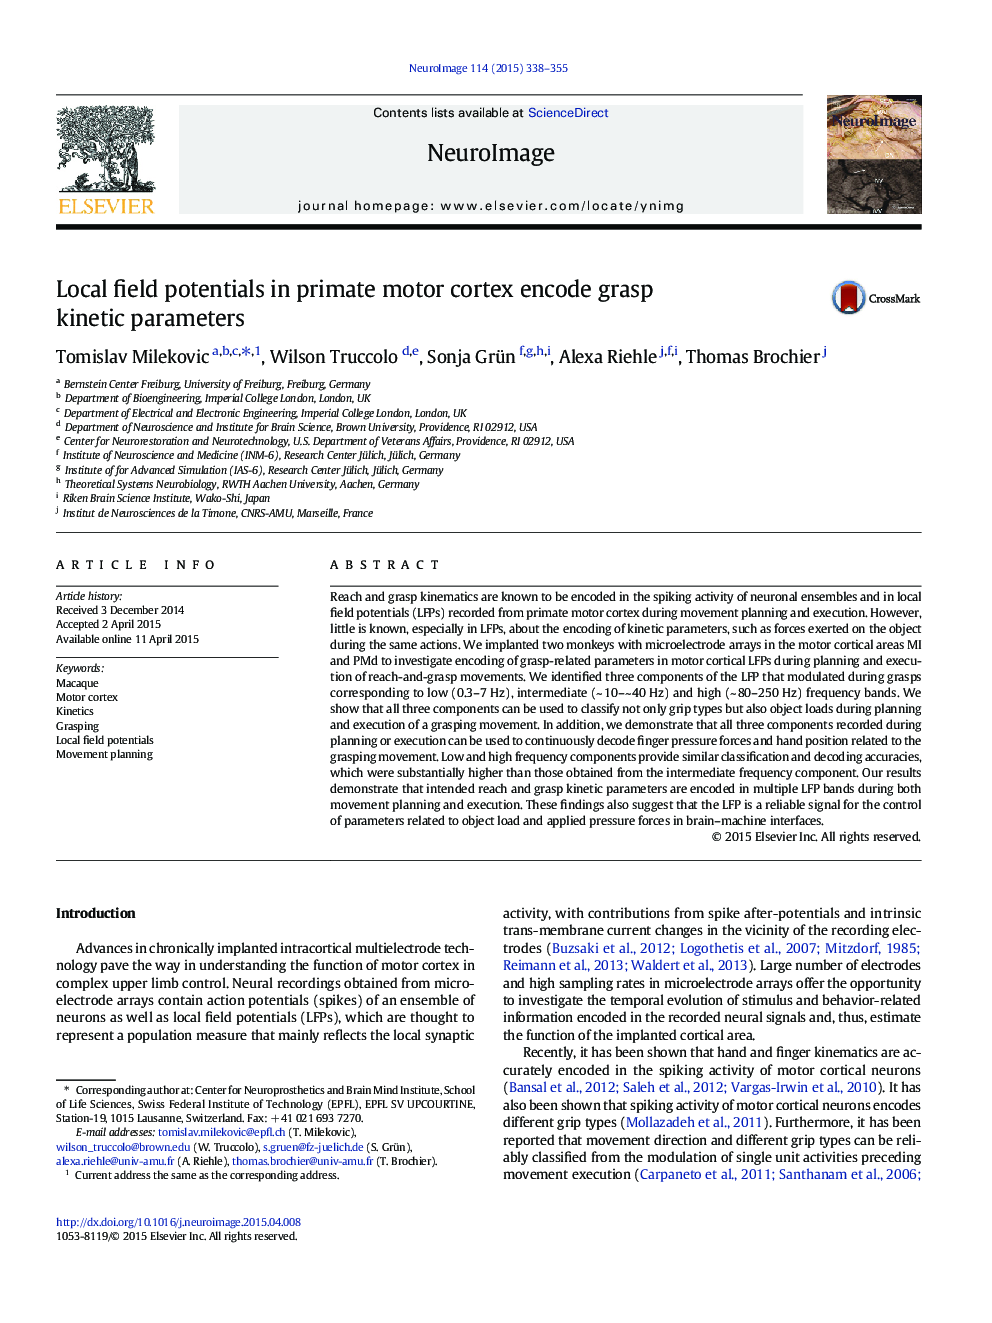 Local field potentials in primate motor cortex encode grasp kinetic parameters